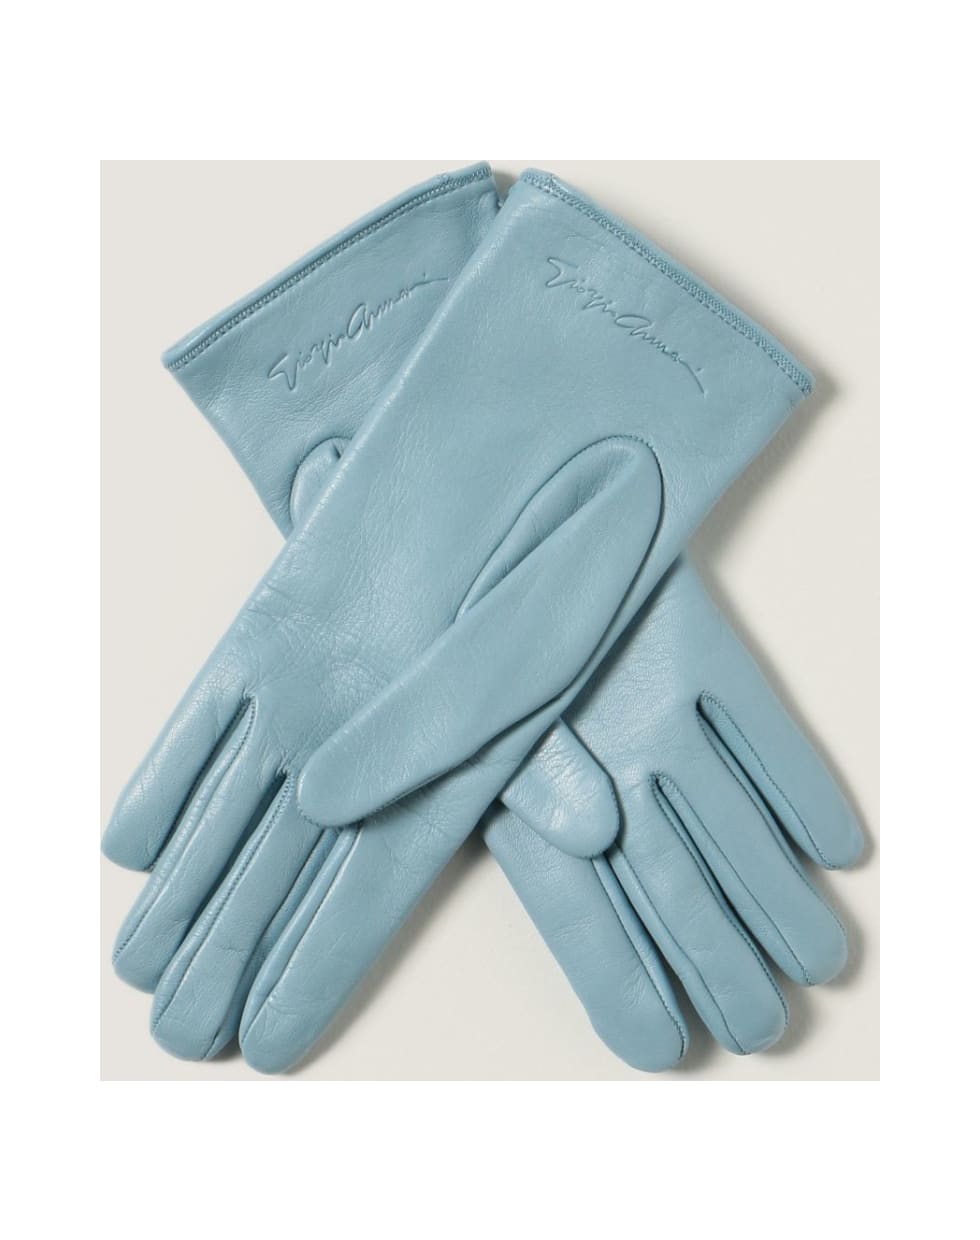 Giorgio Armani Gloves Giorgio Armani Gloves In Lambskin - Gnawed Blue